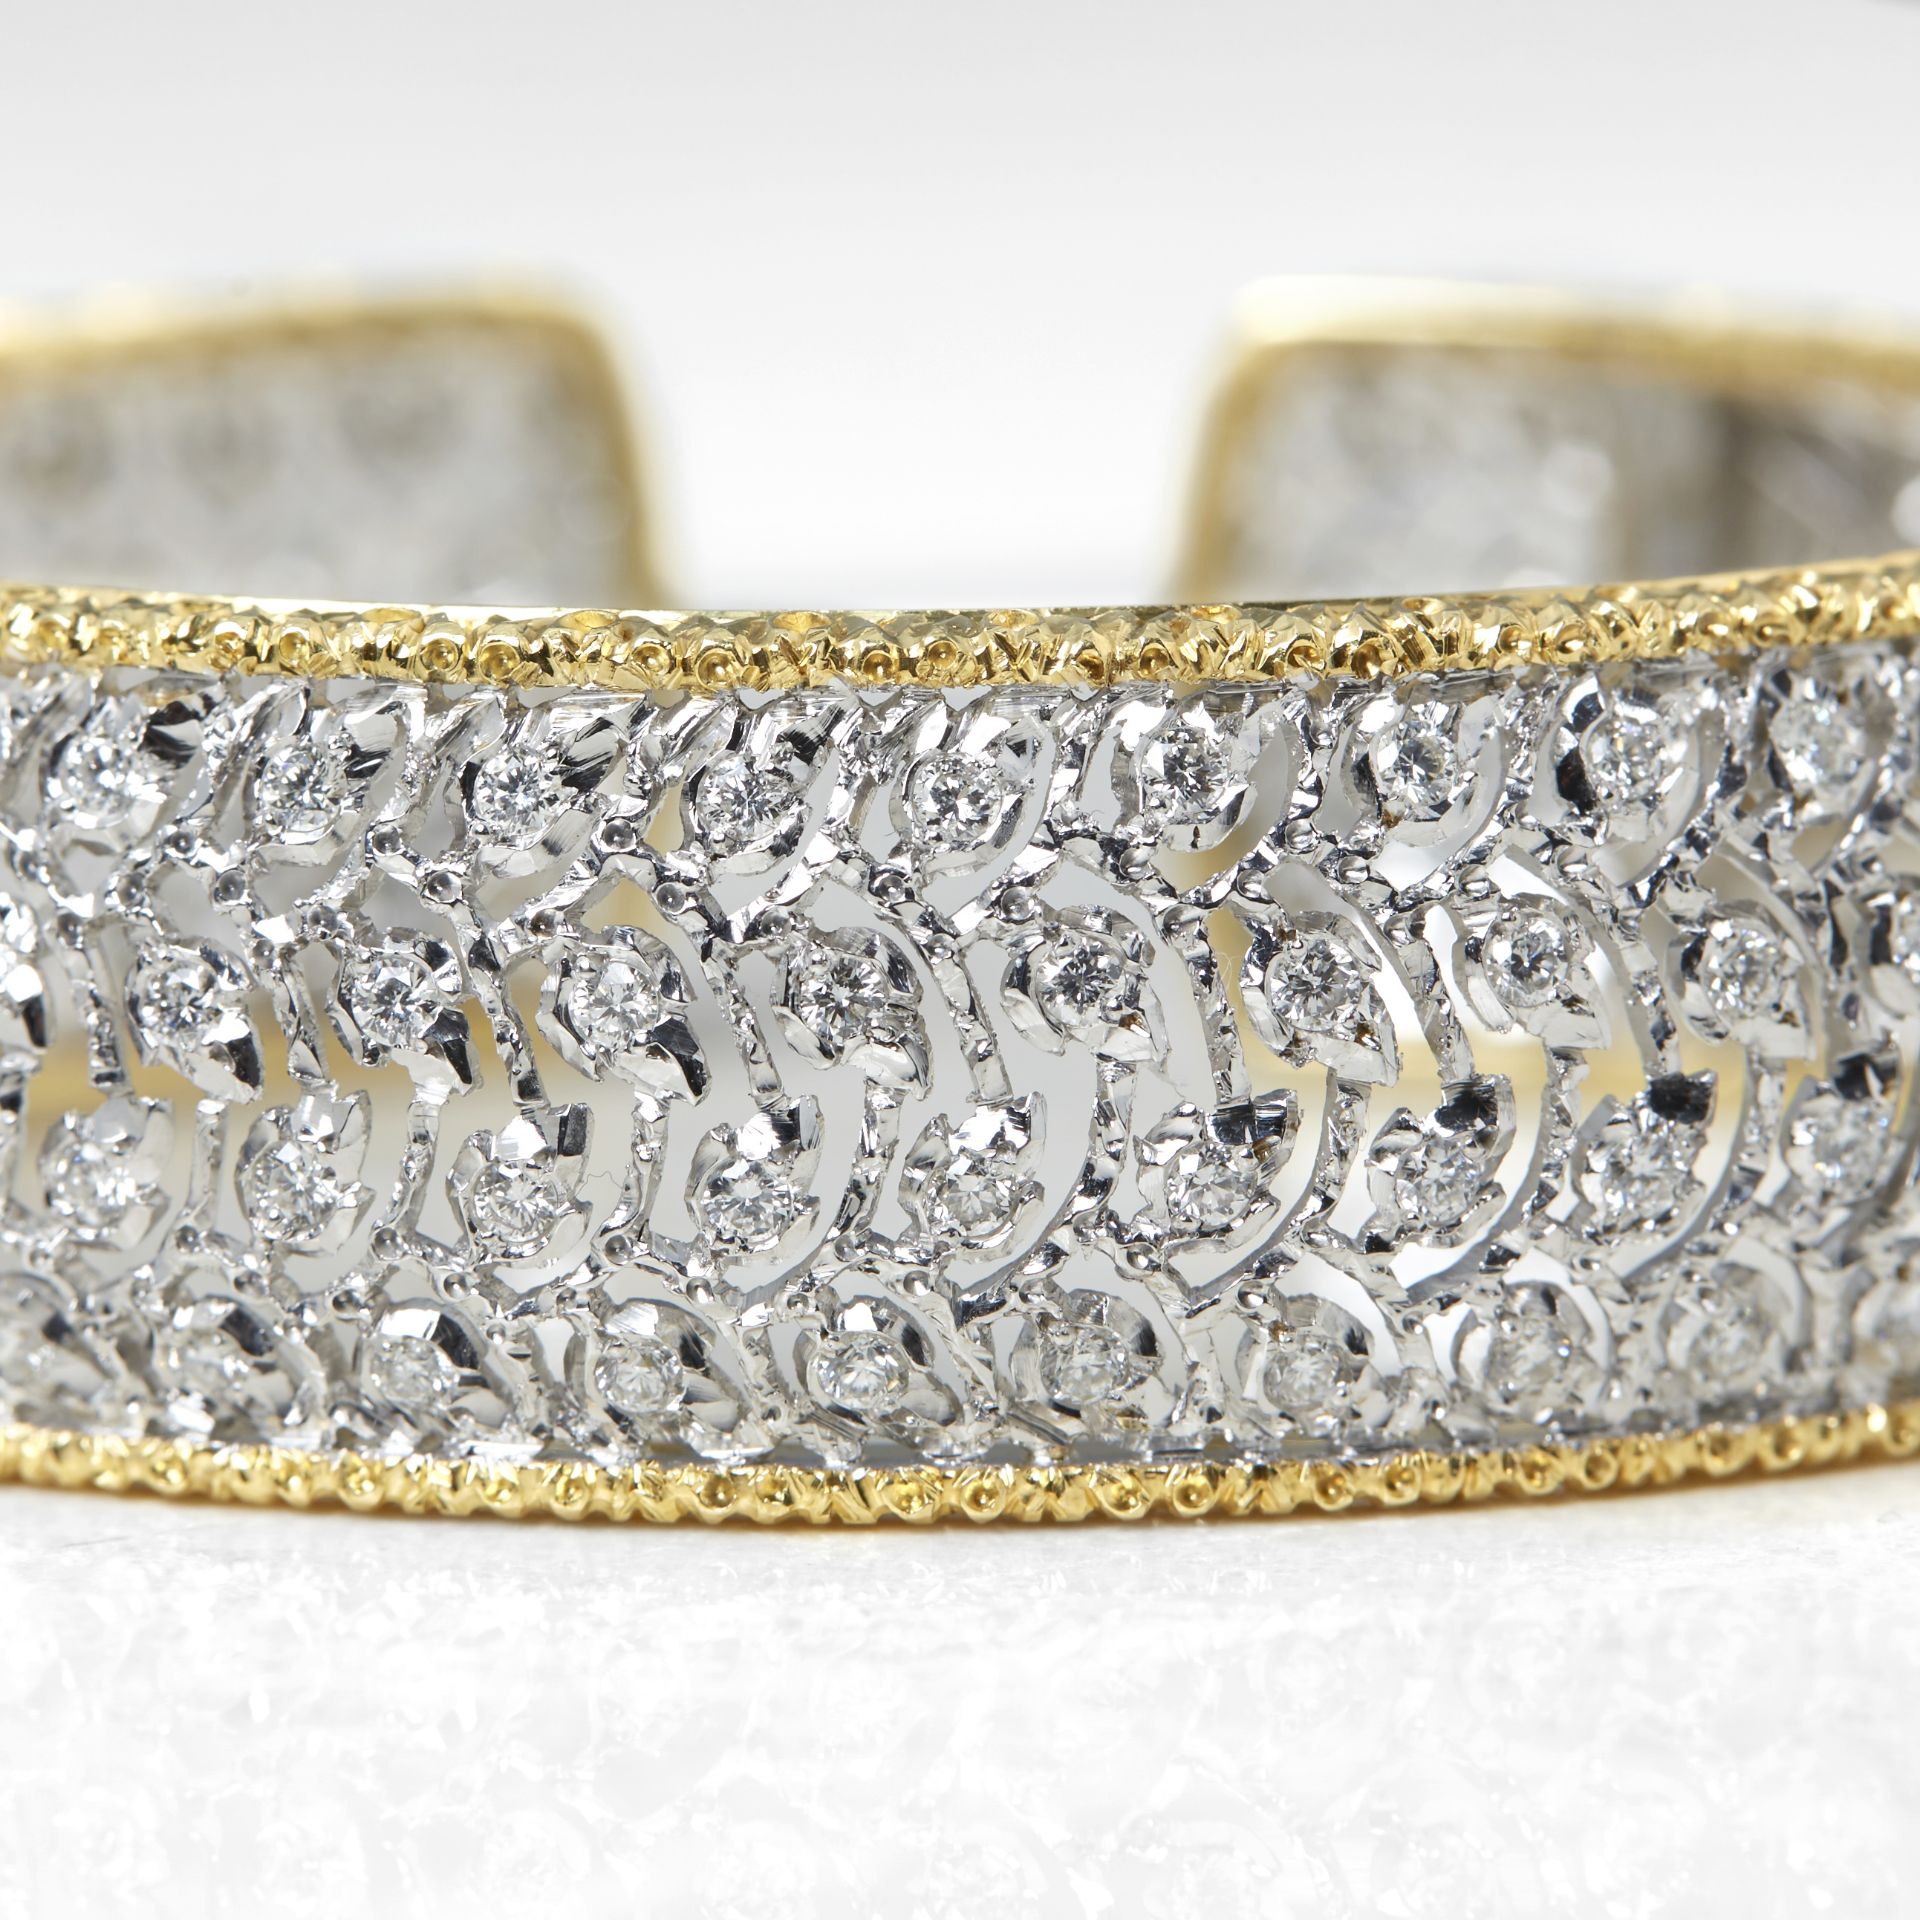 Buccellati 18k White & Yellow Gold 5.00ct Diamond Cuff Bracelet with Presentation Box - Image 3 of 8